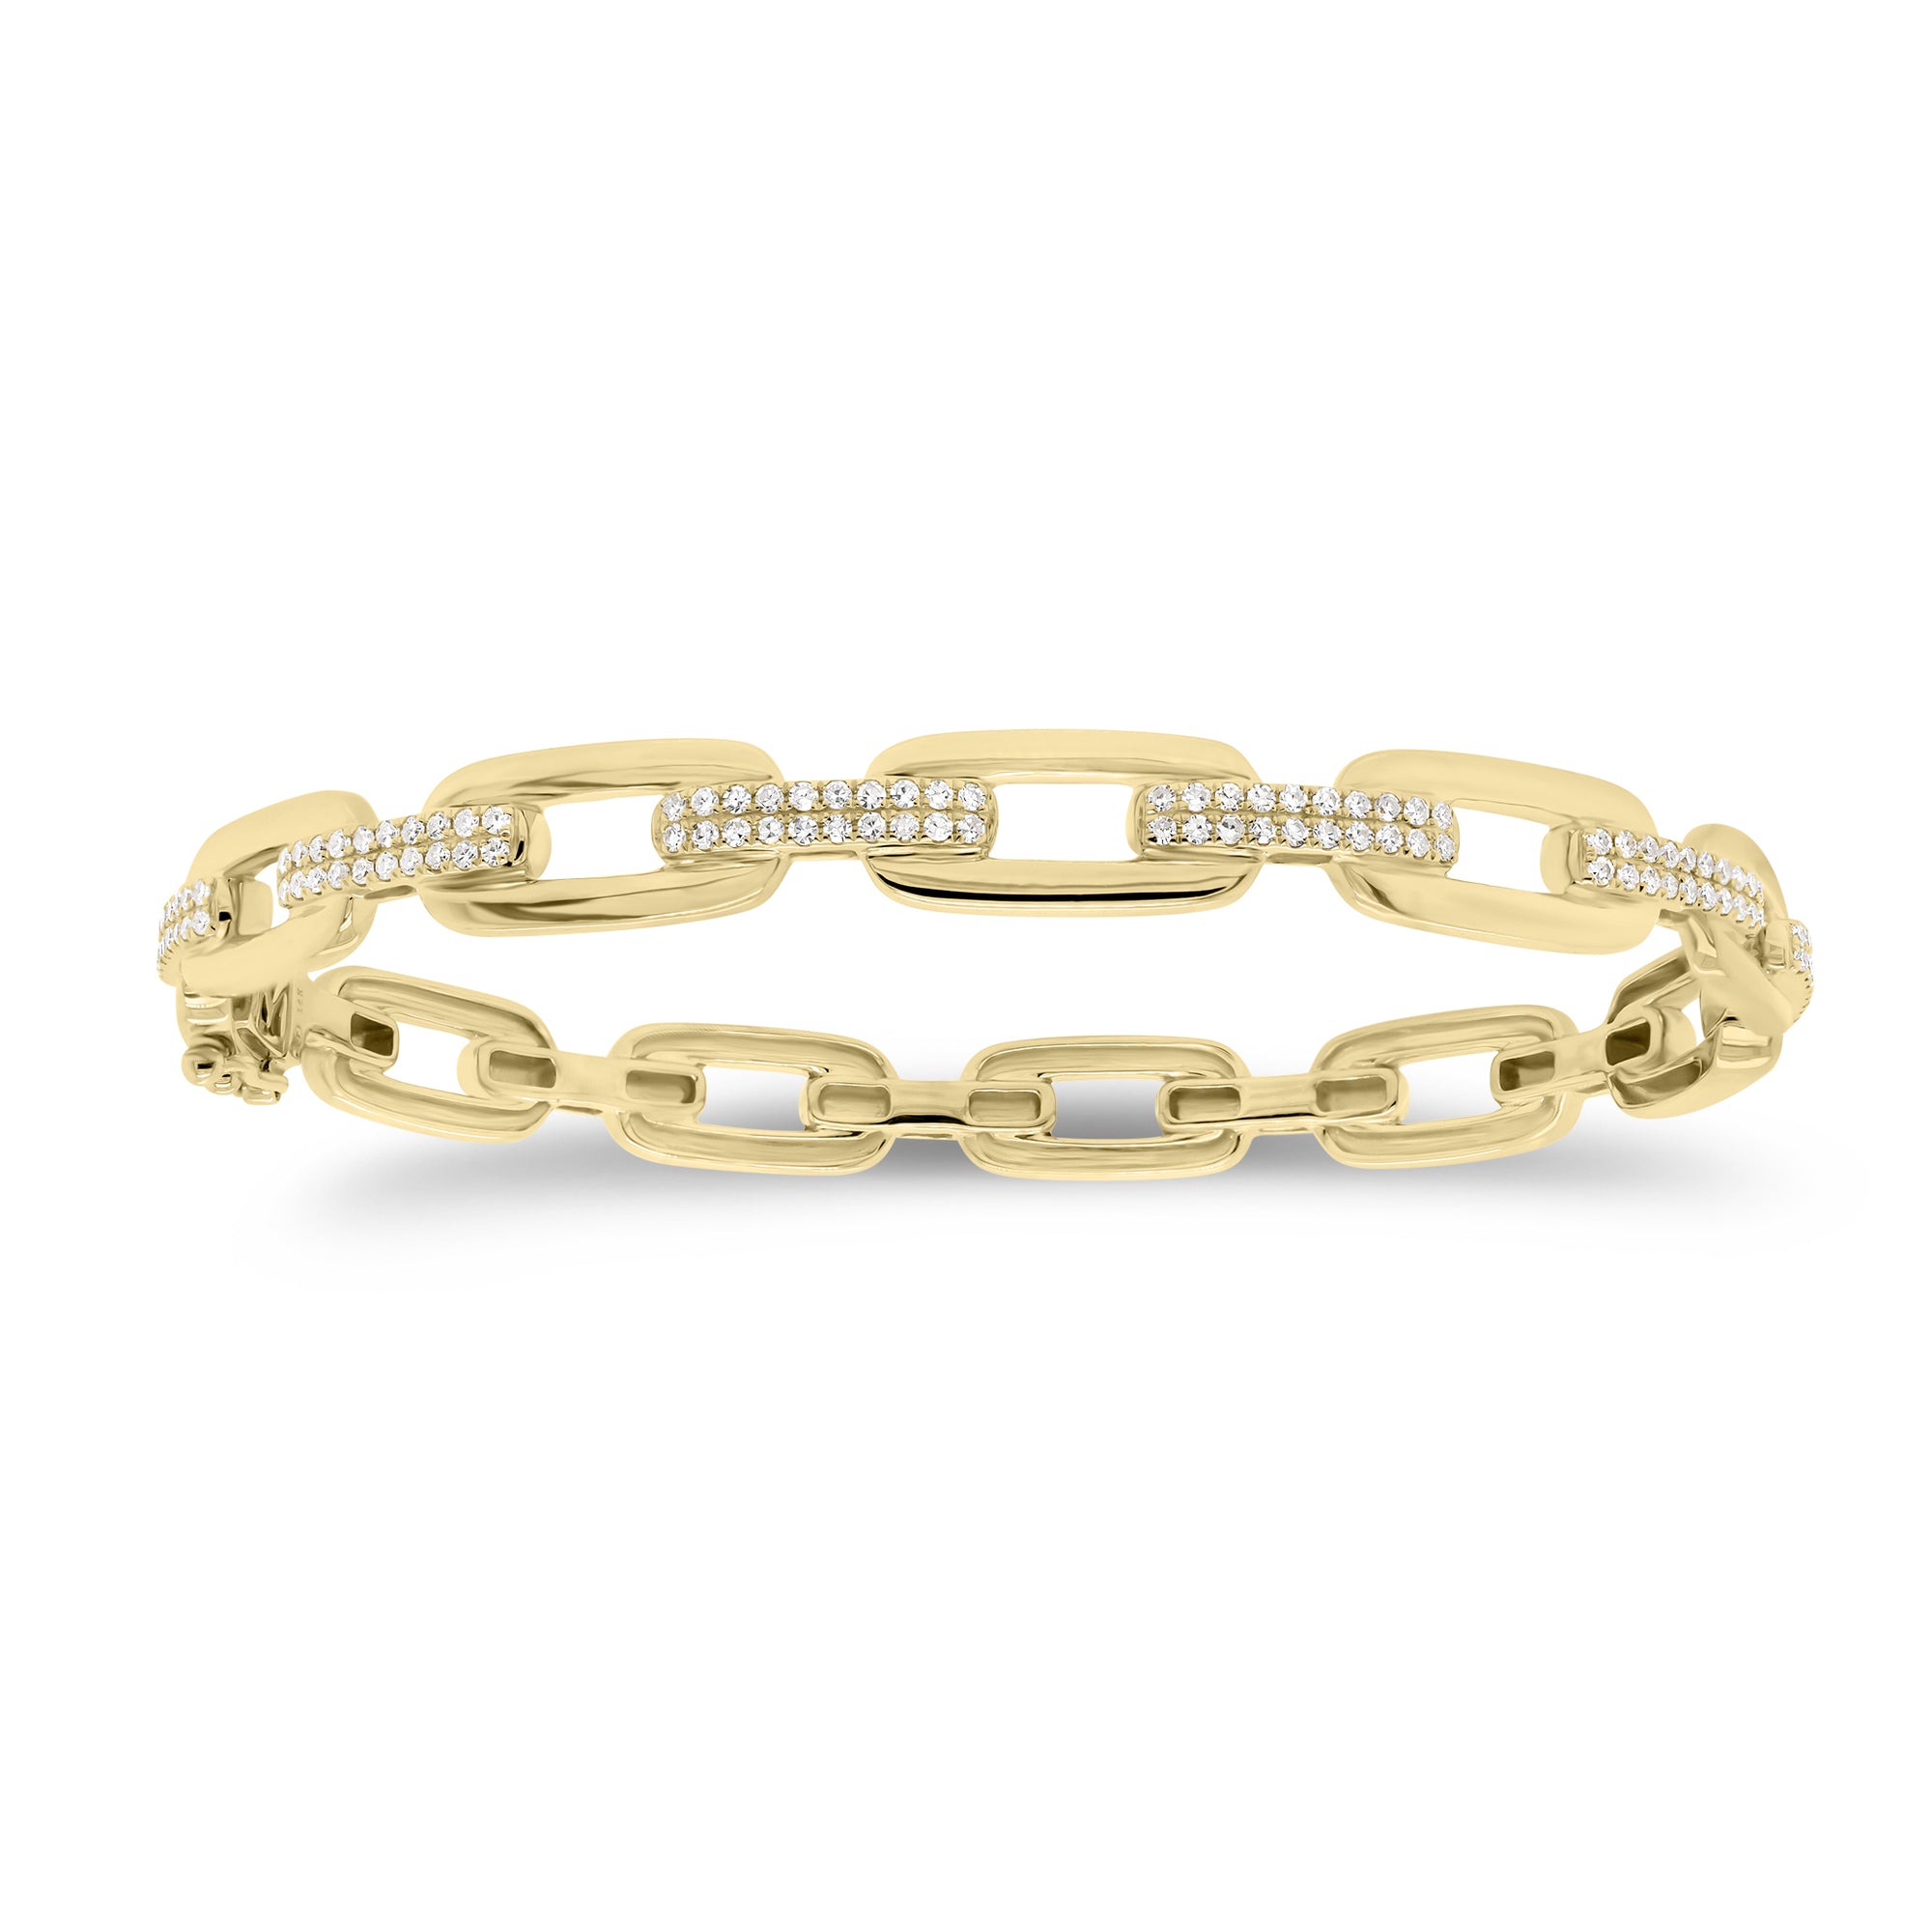 Diamond Bold Link Bangle Bracelet  - 14K gold weighing 14.59 grams  - 120 round diamonds totaling 0.45 carats